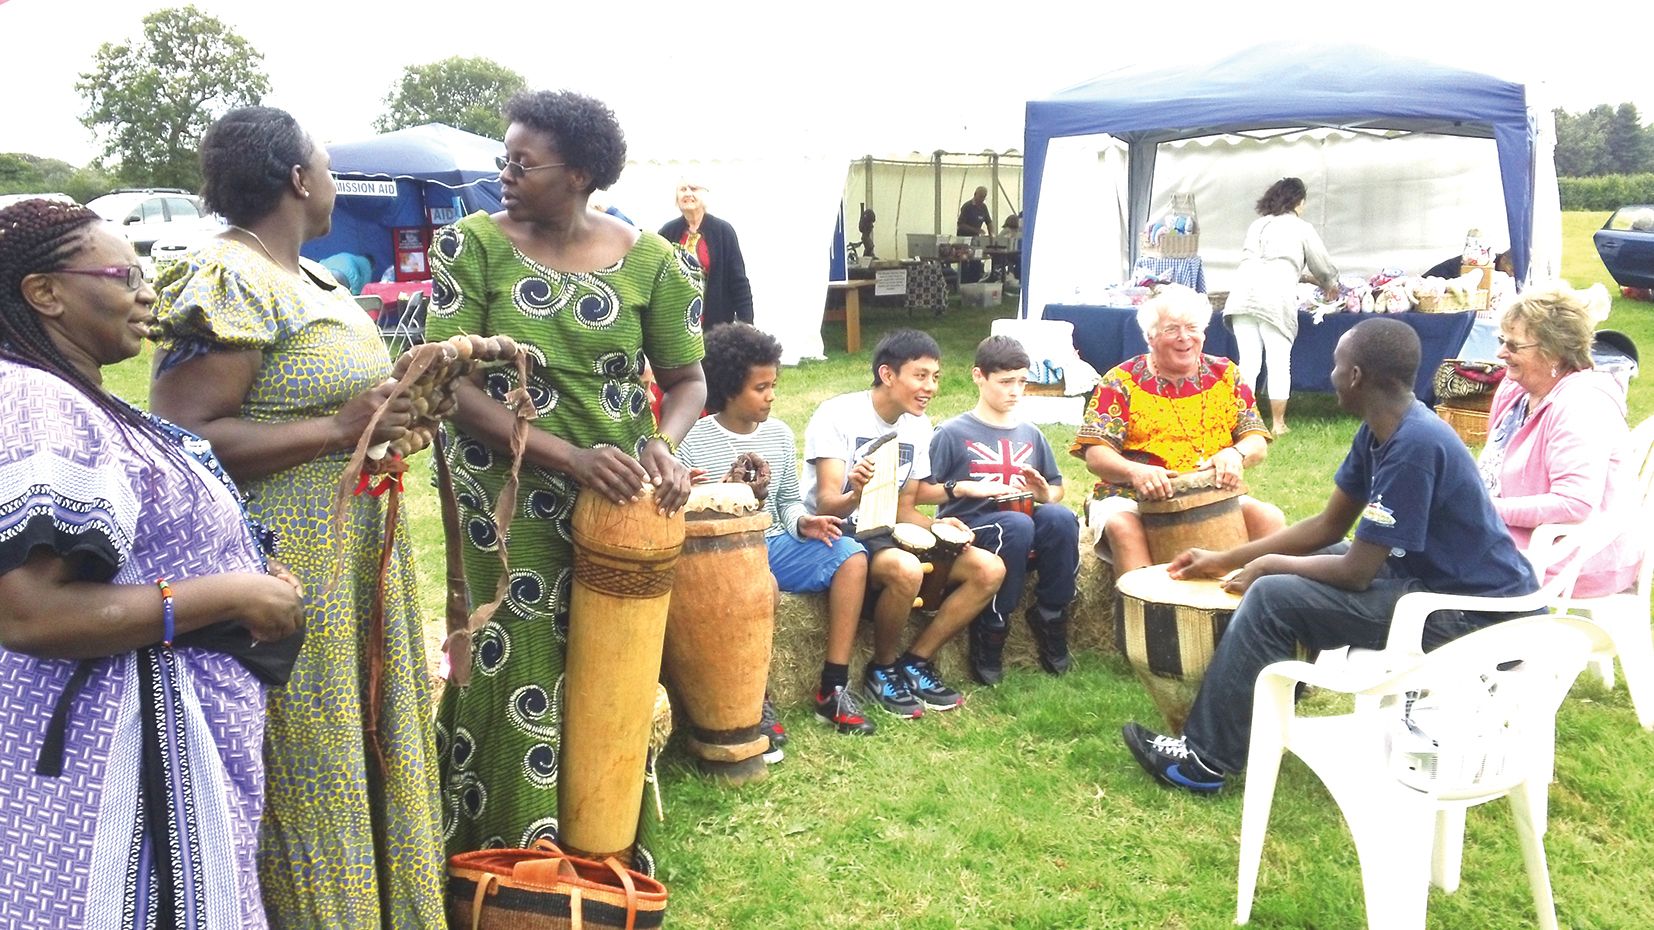 Farmfest exhibitors and visitors enjoying drumming